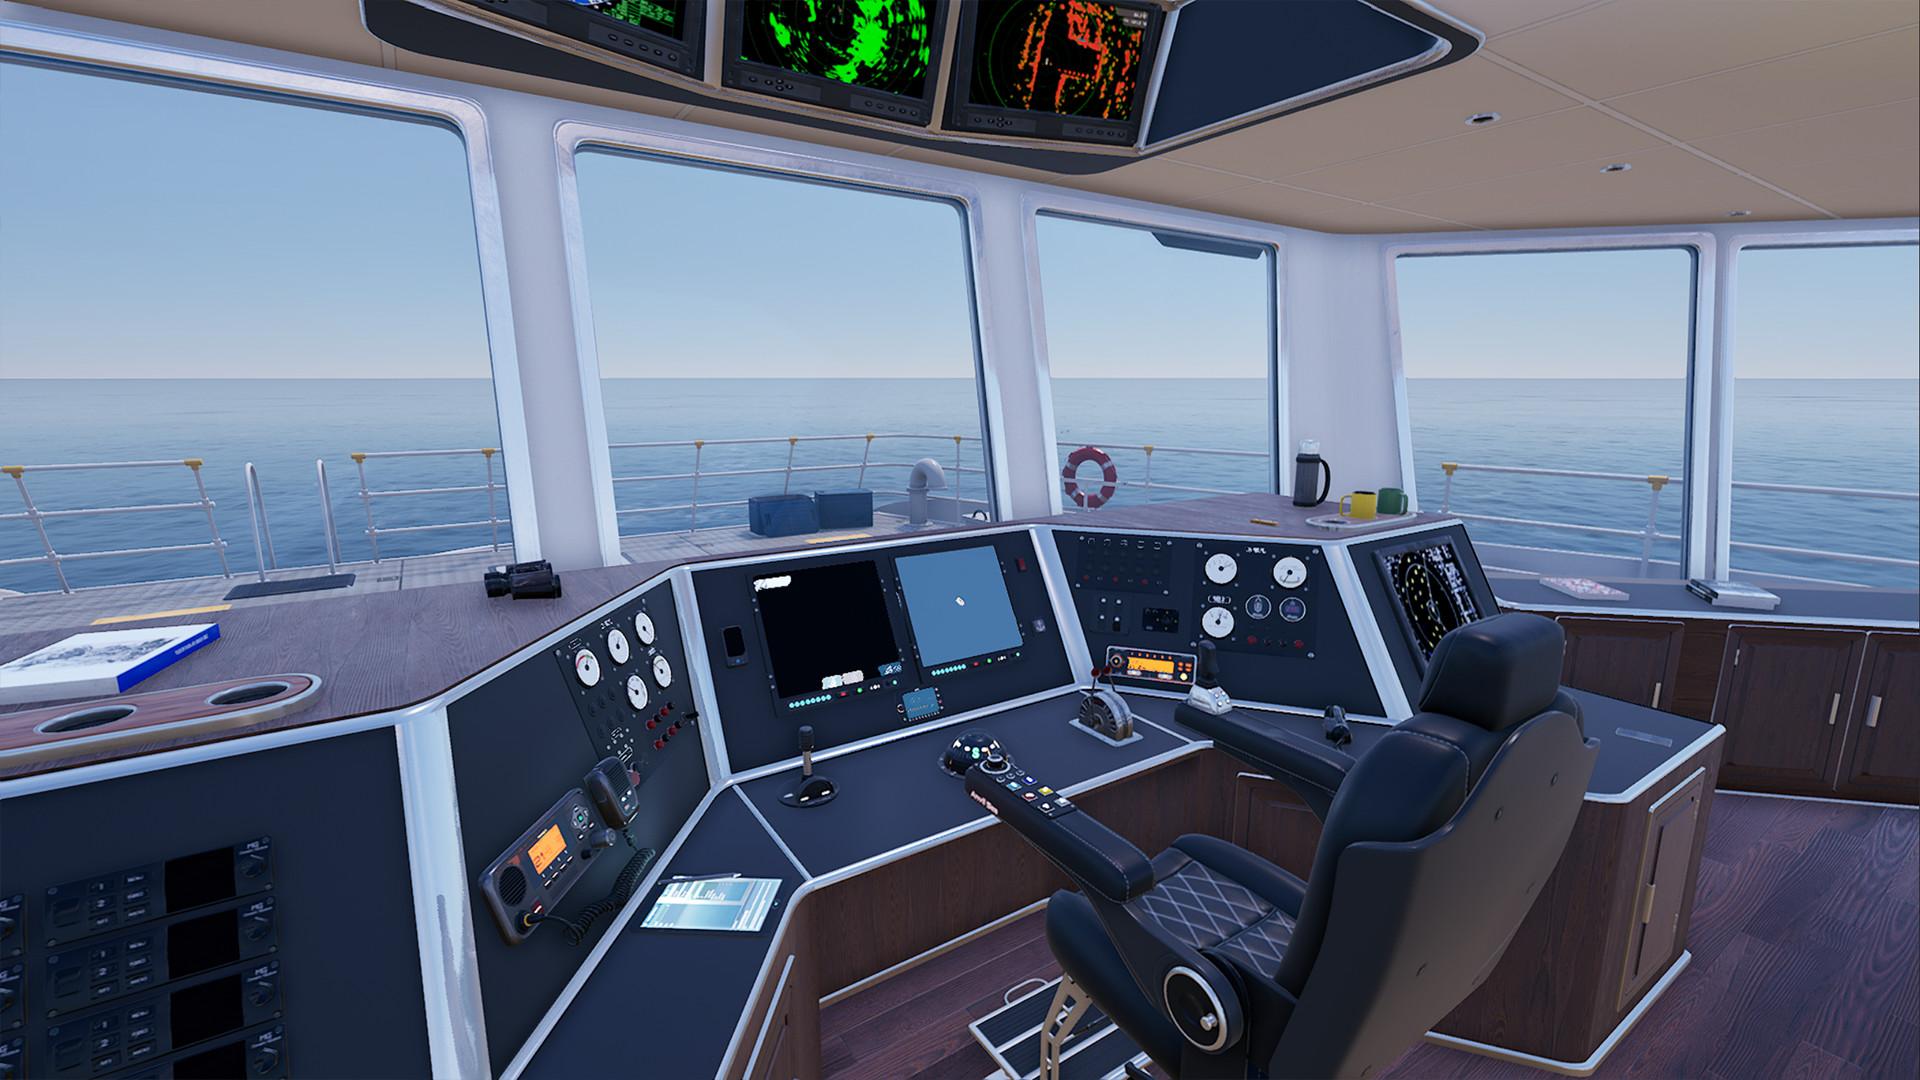 Screenshot №10 from game Fishing: North Atlantic - Enhanced Edition